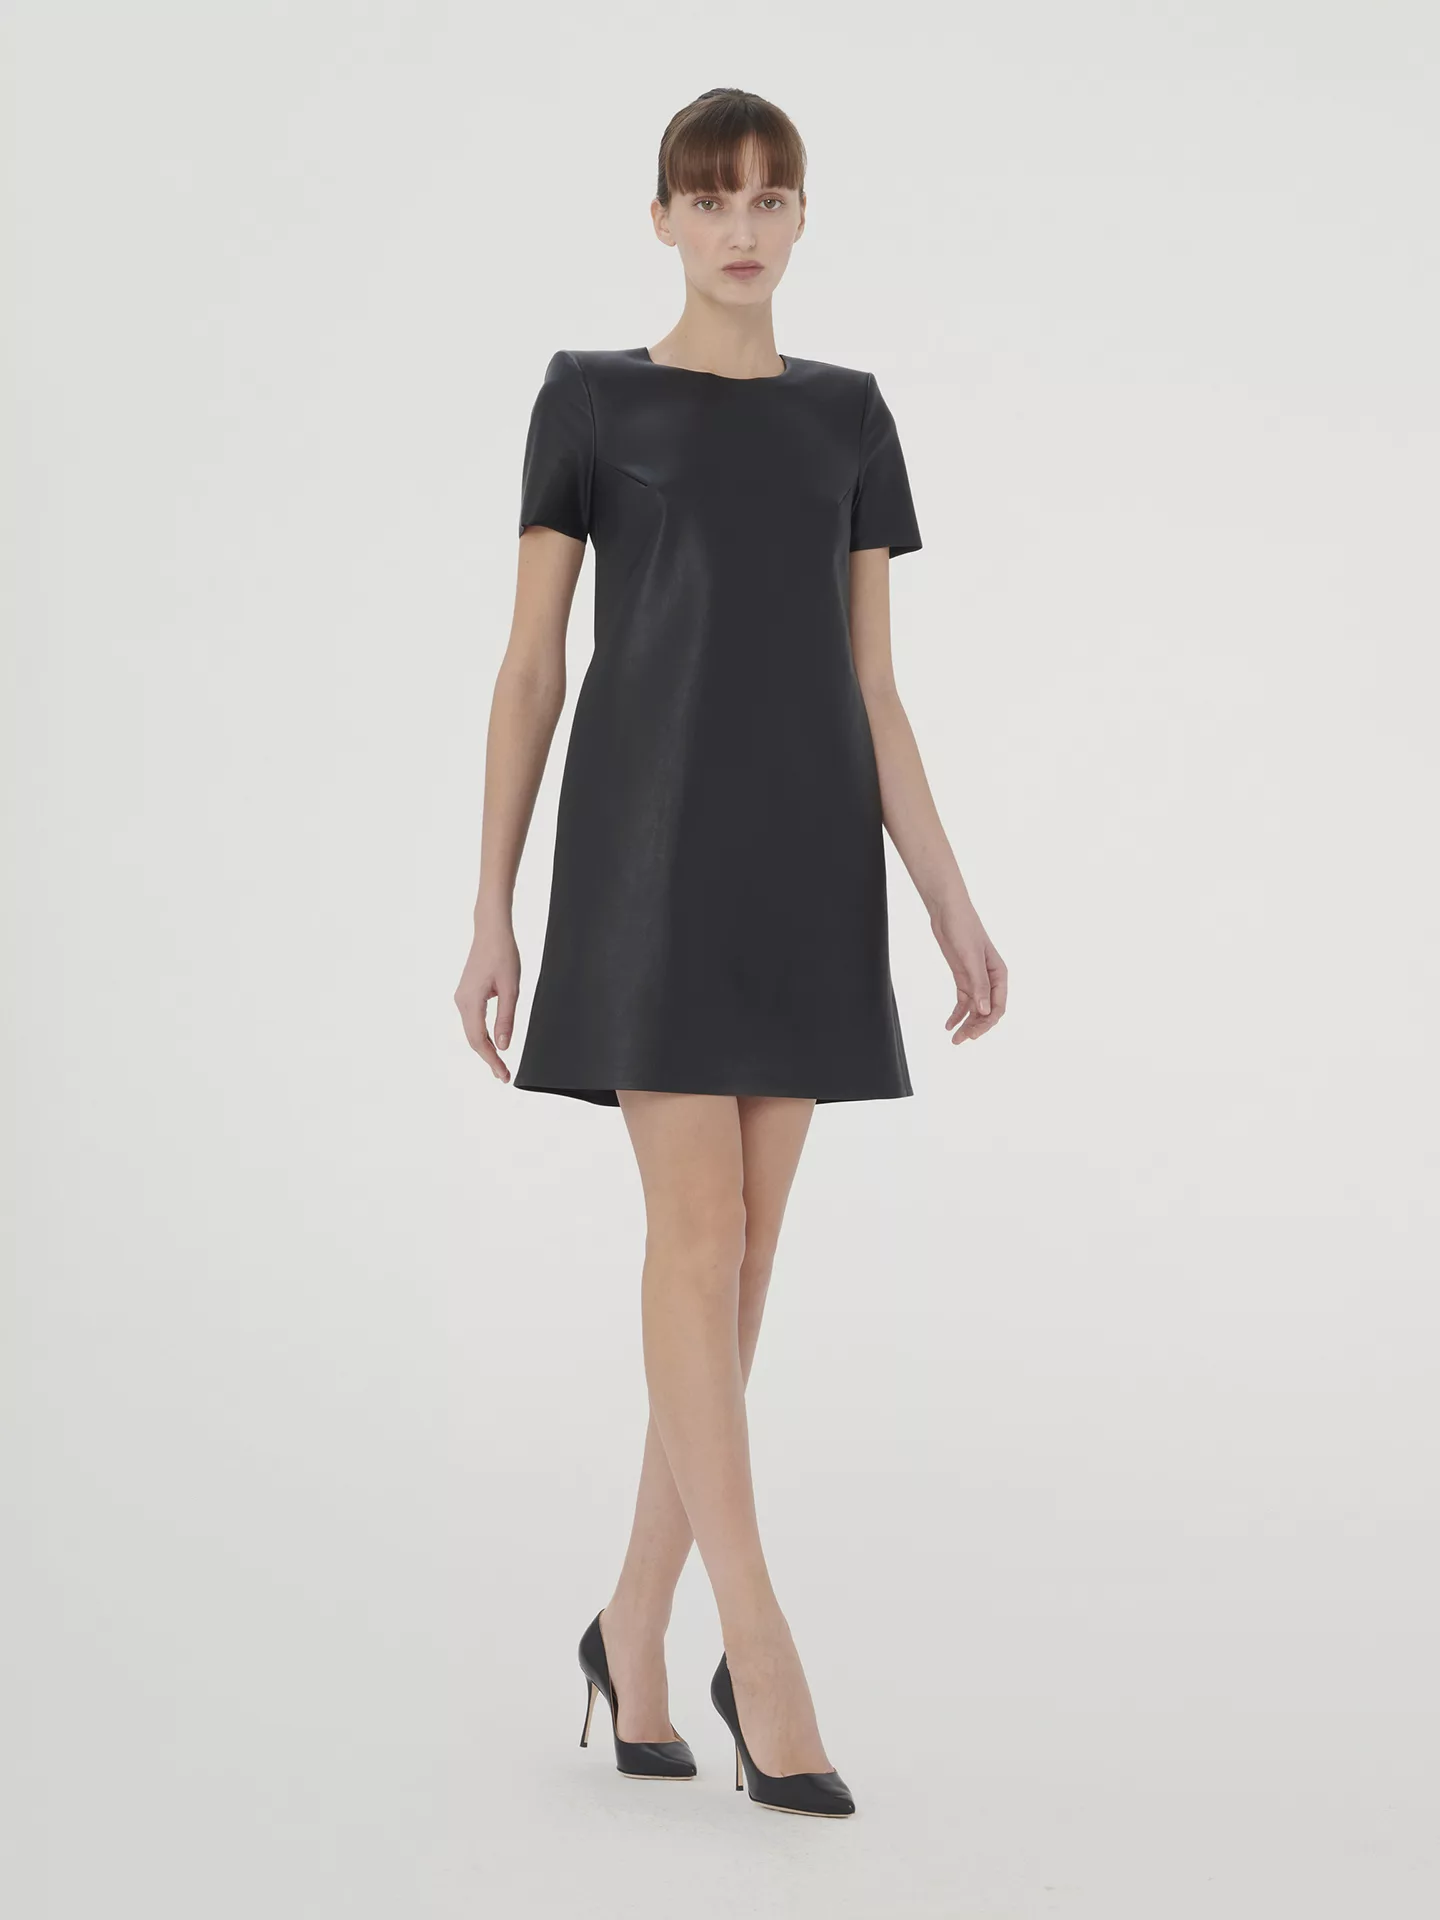 Wolford - Vegan Dress, Frau, black, Größe: 42 günstig online kaufen